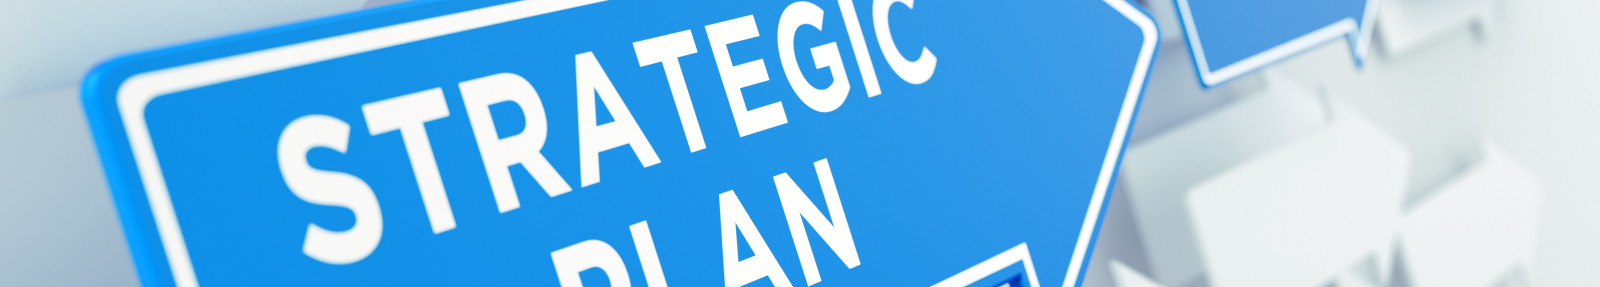 words strategic plan in blue